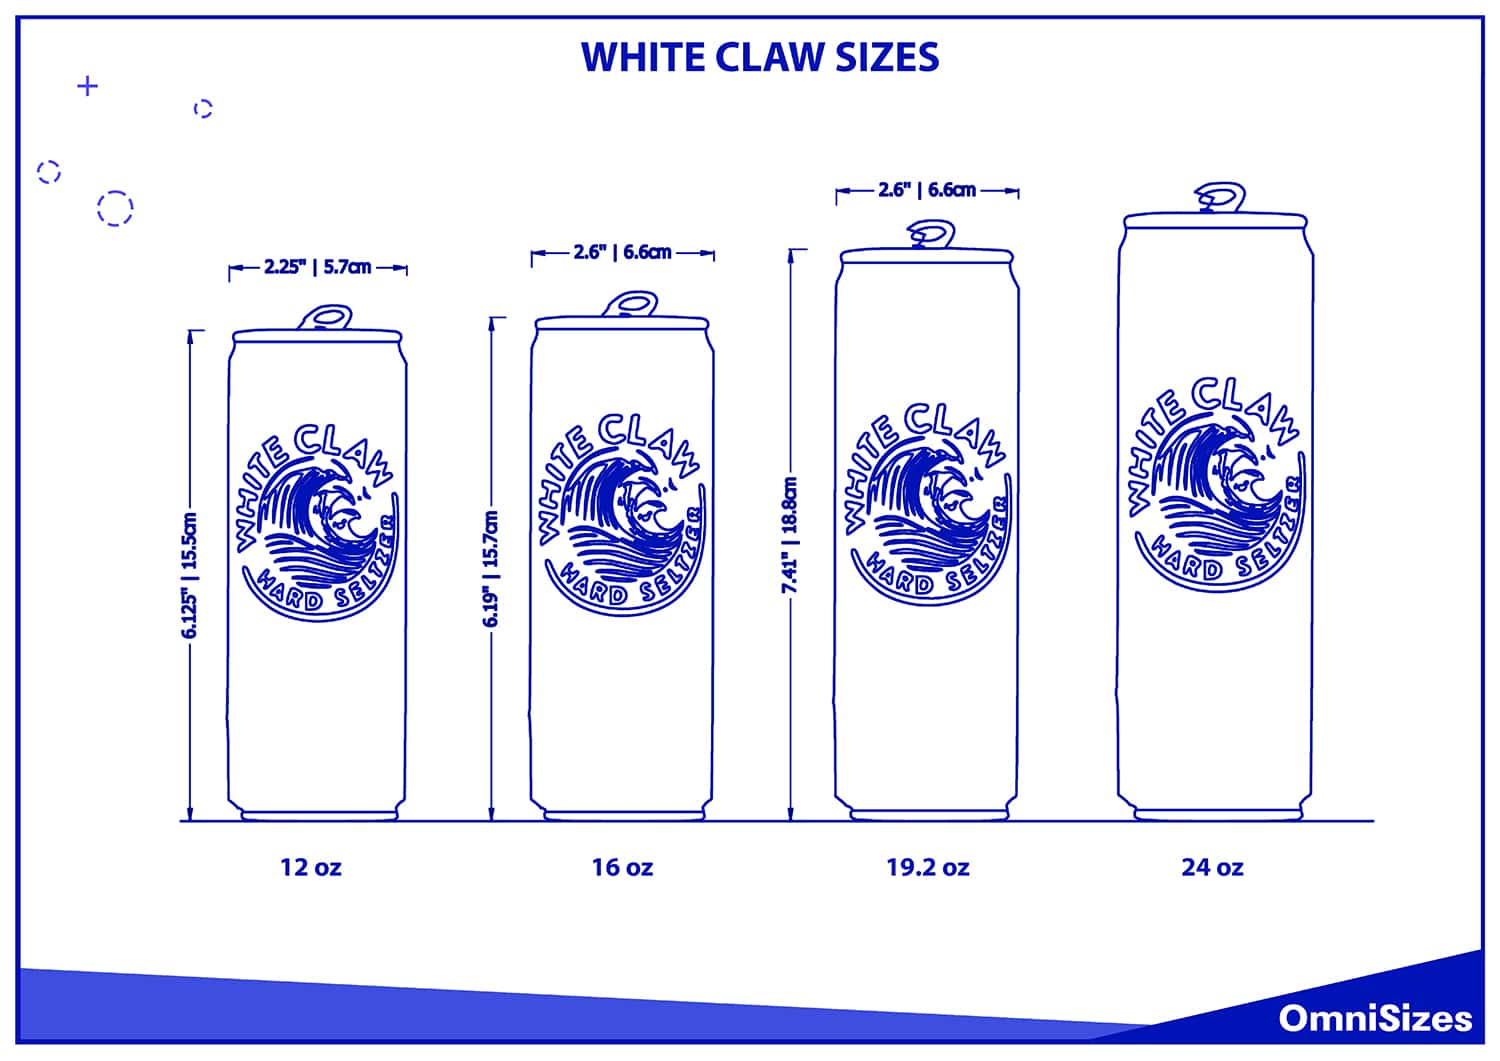 White Claw sizes